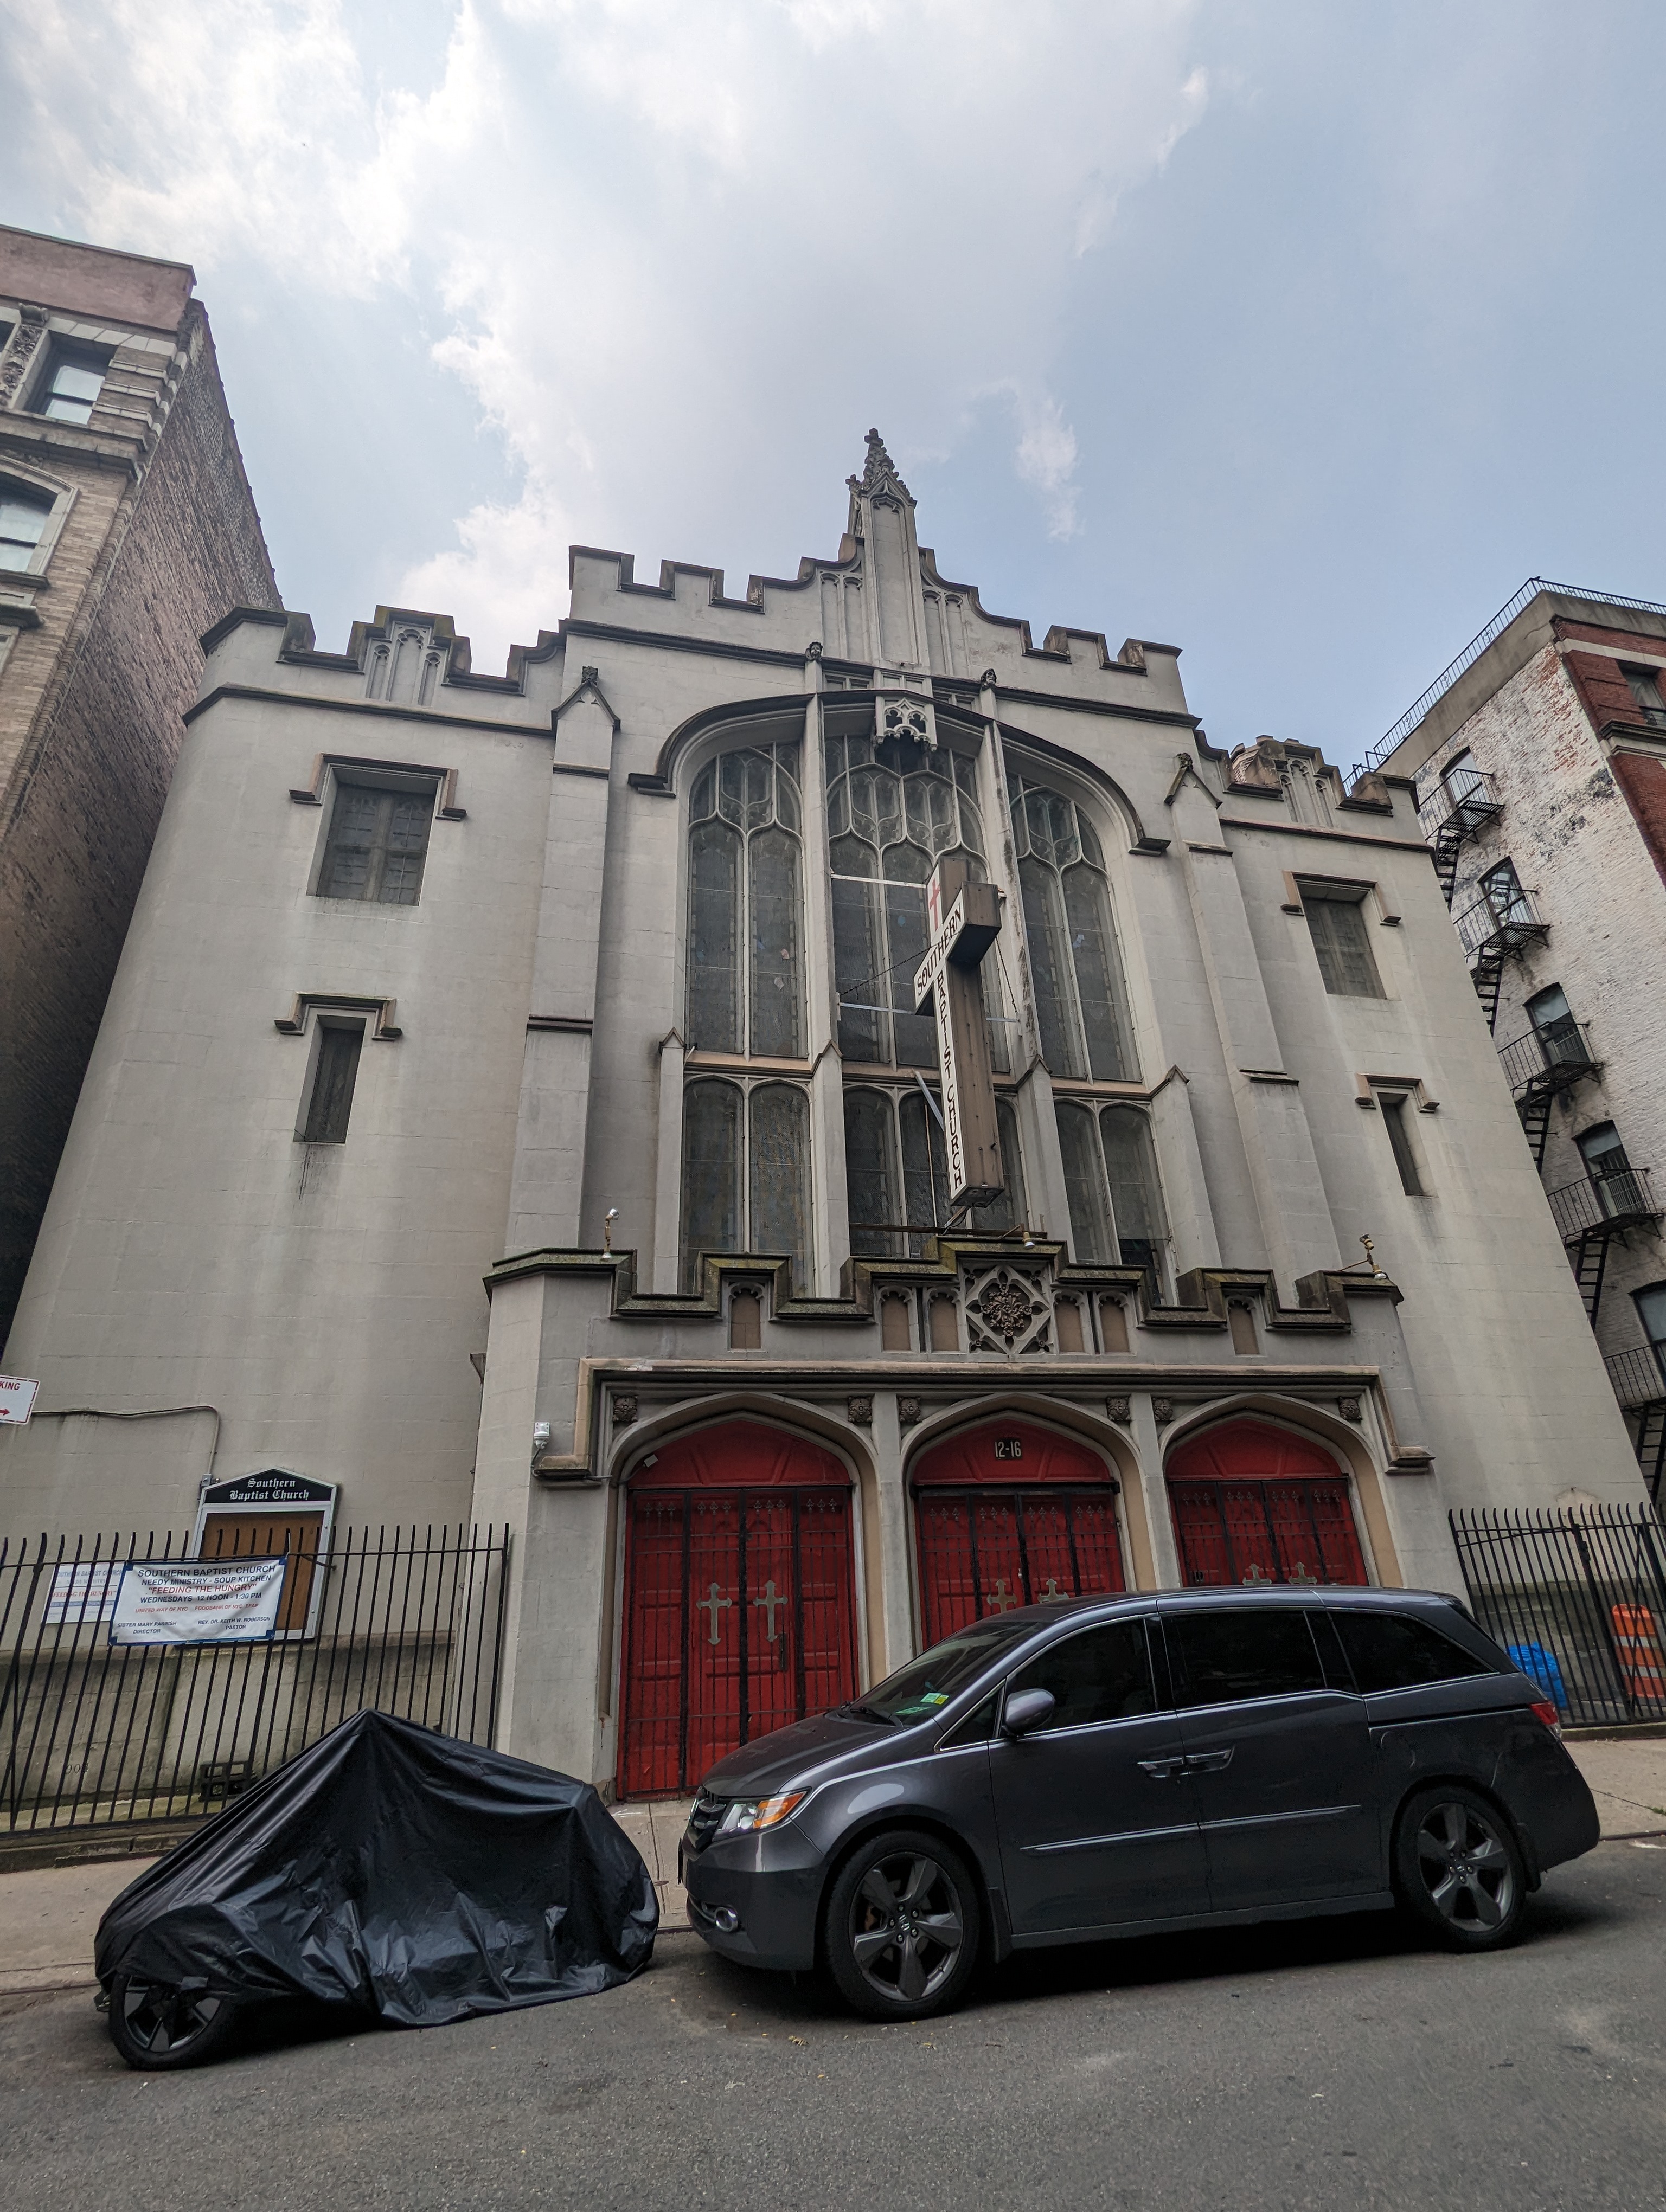 14 West 108th Street: Southern Baptist Church